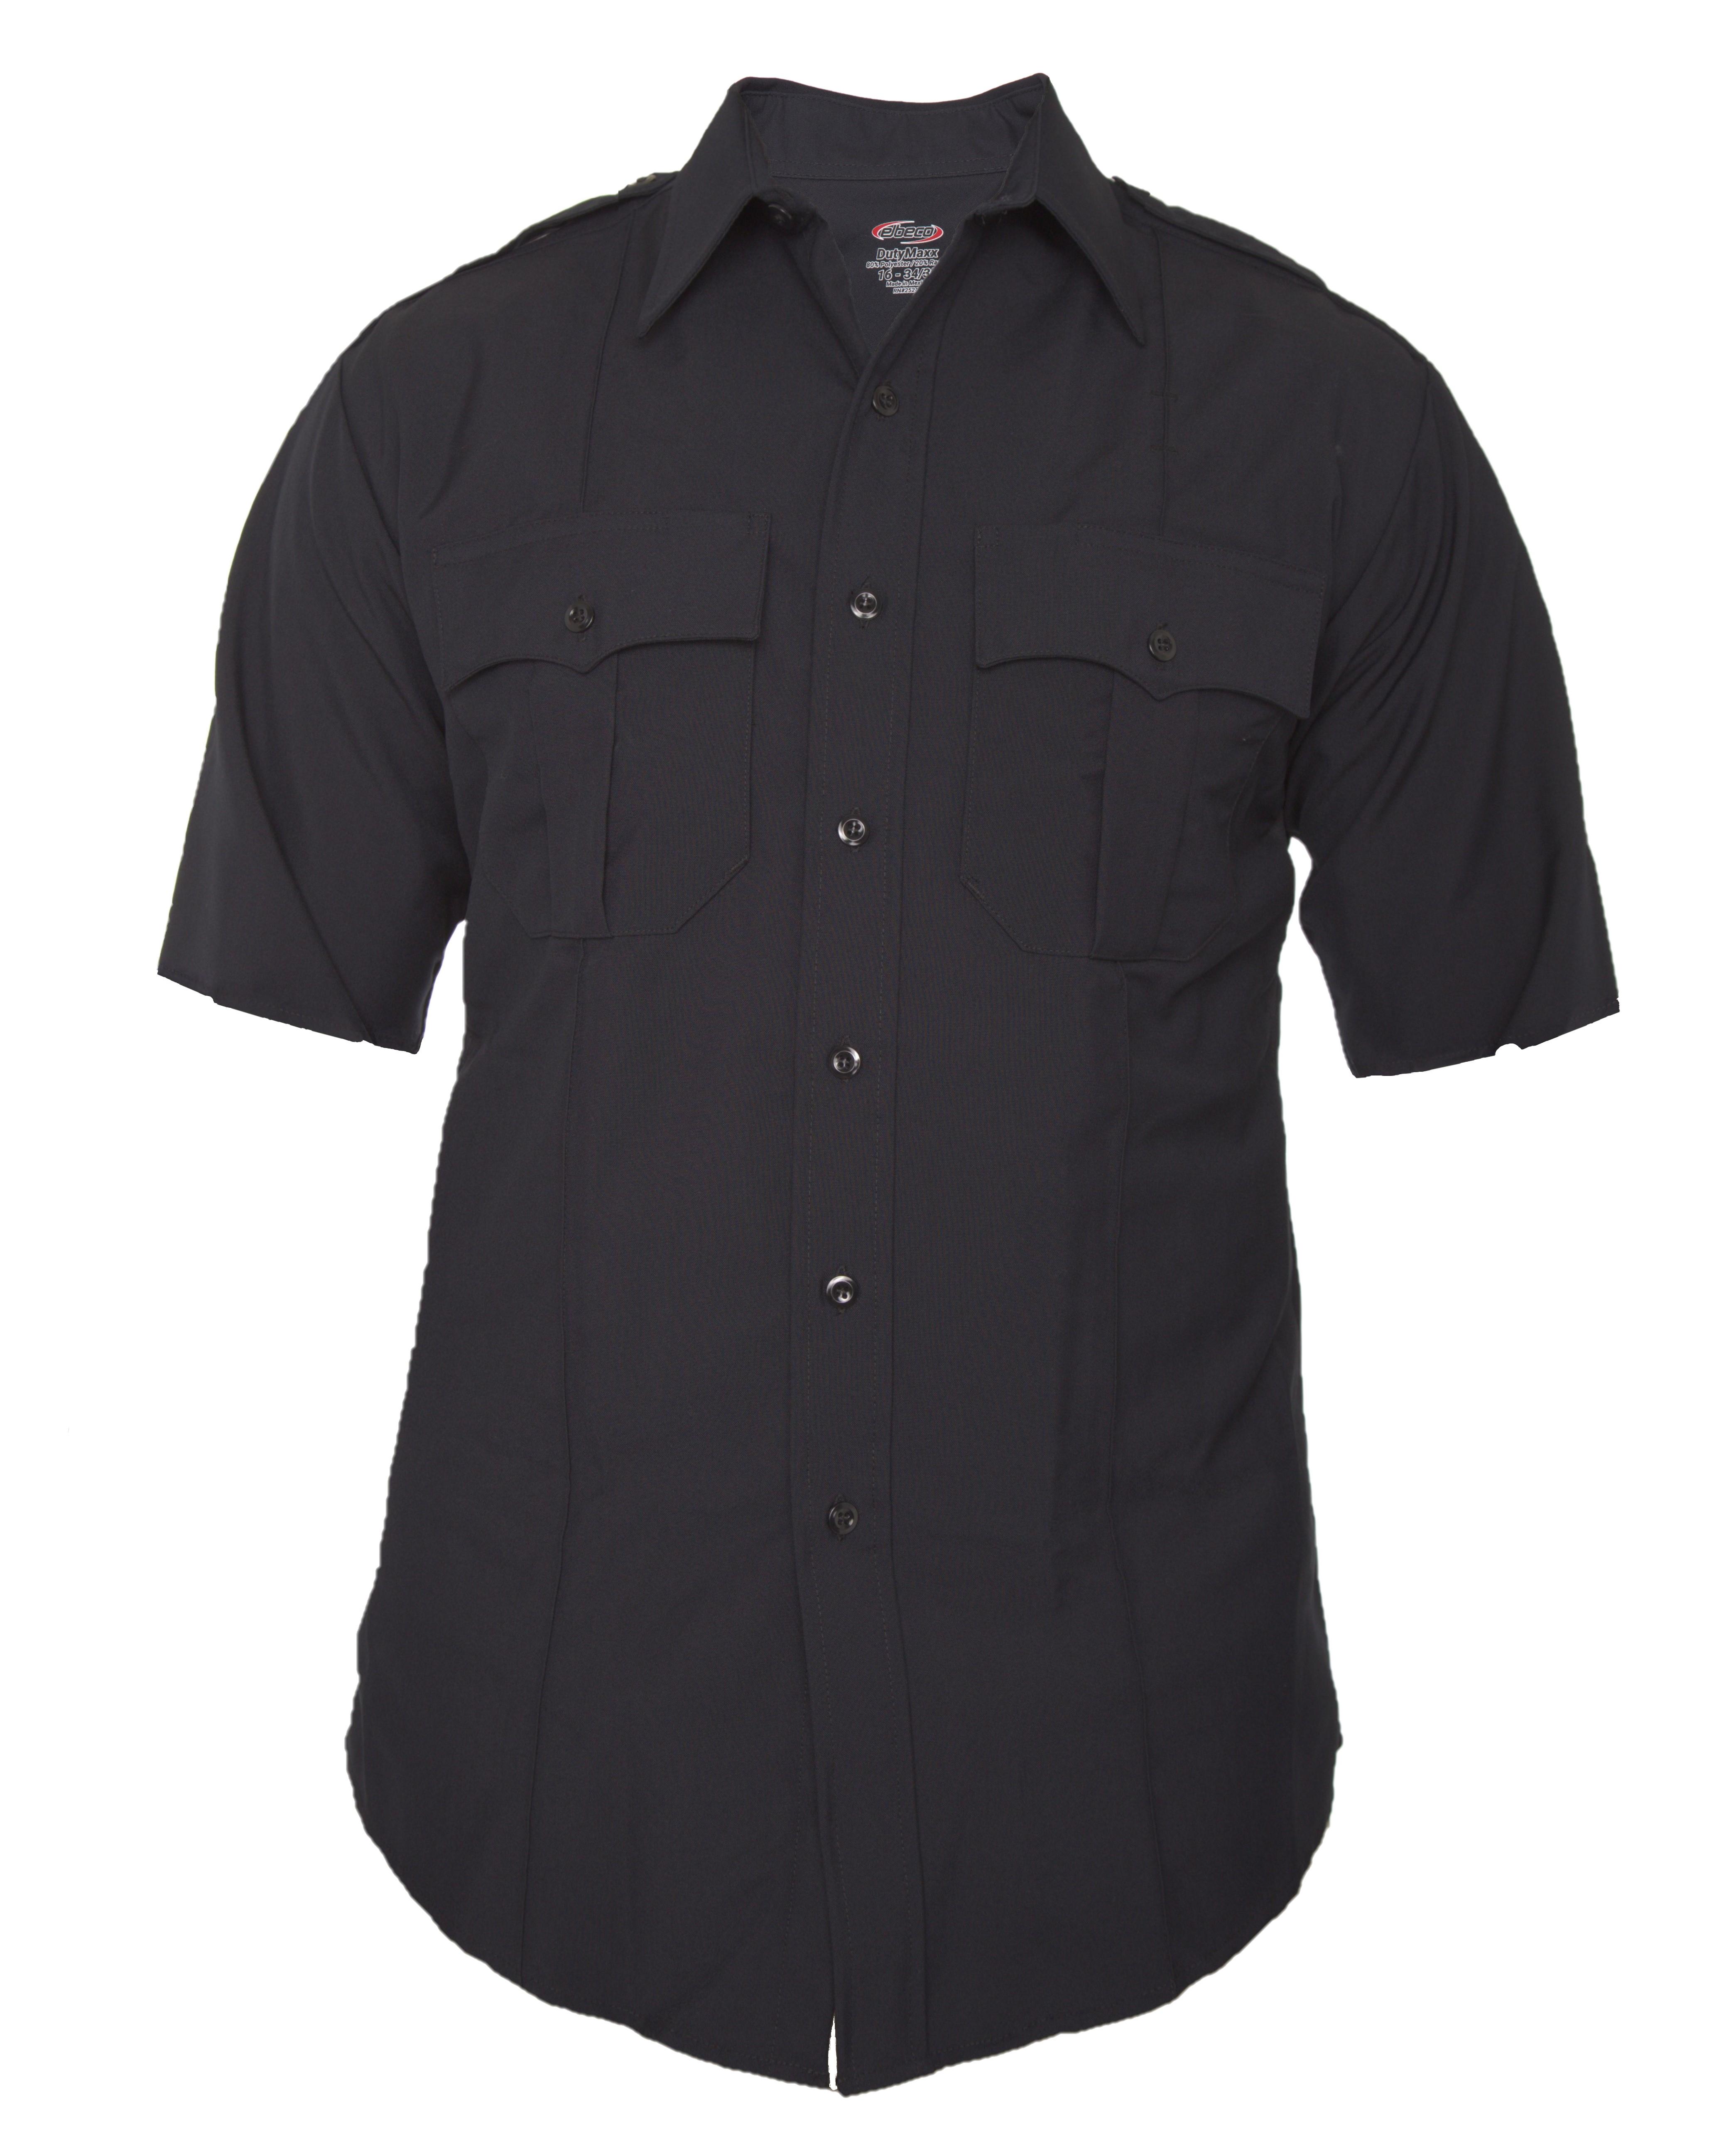  Dutymaxx Short Sleeve Poly/Rayon Stretch Shirt - Midnight Navy